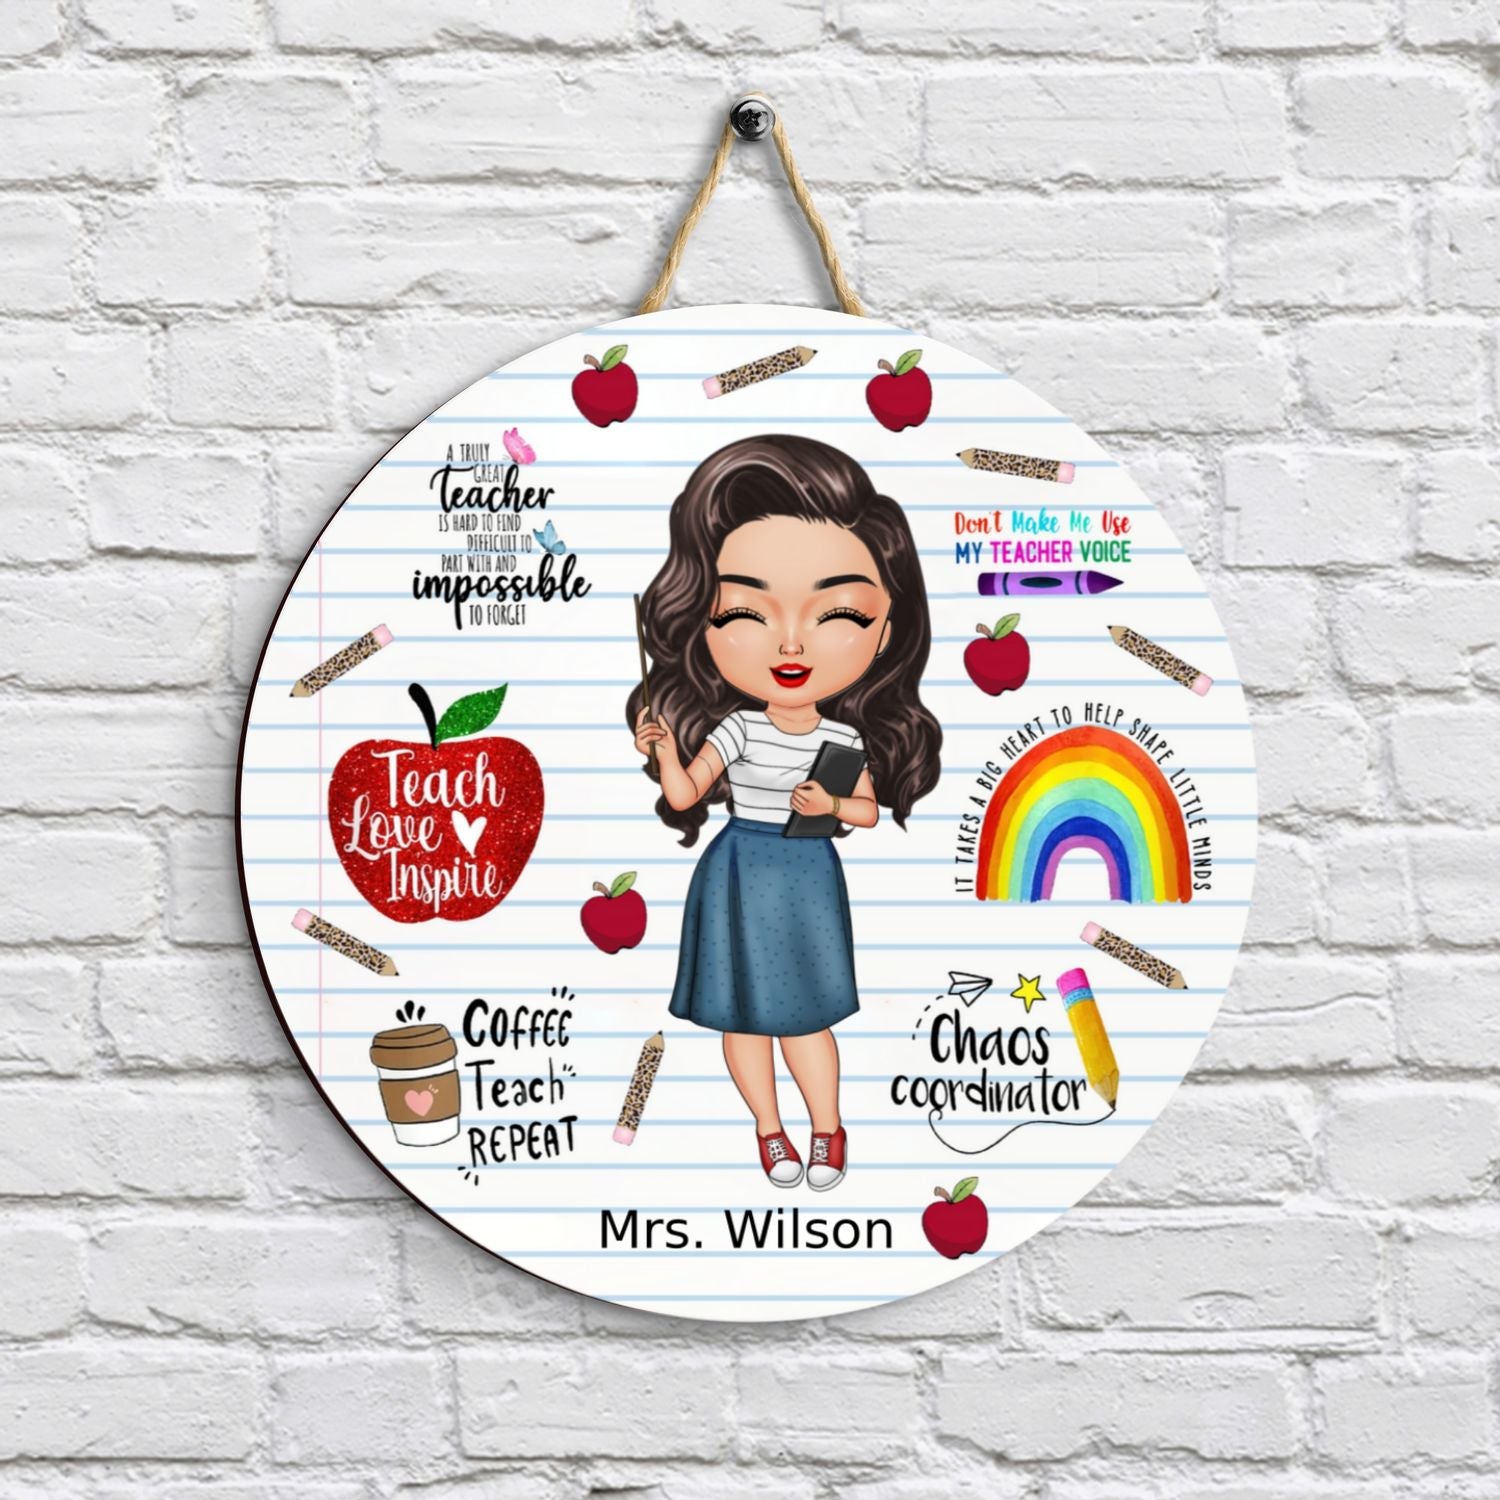 Personalized Door Sign - Gift For Teacher - Teach Love Inspire Teacher